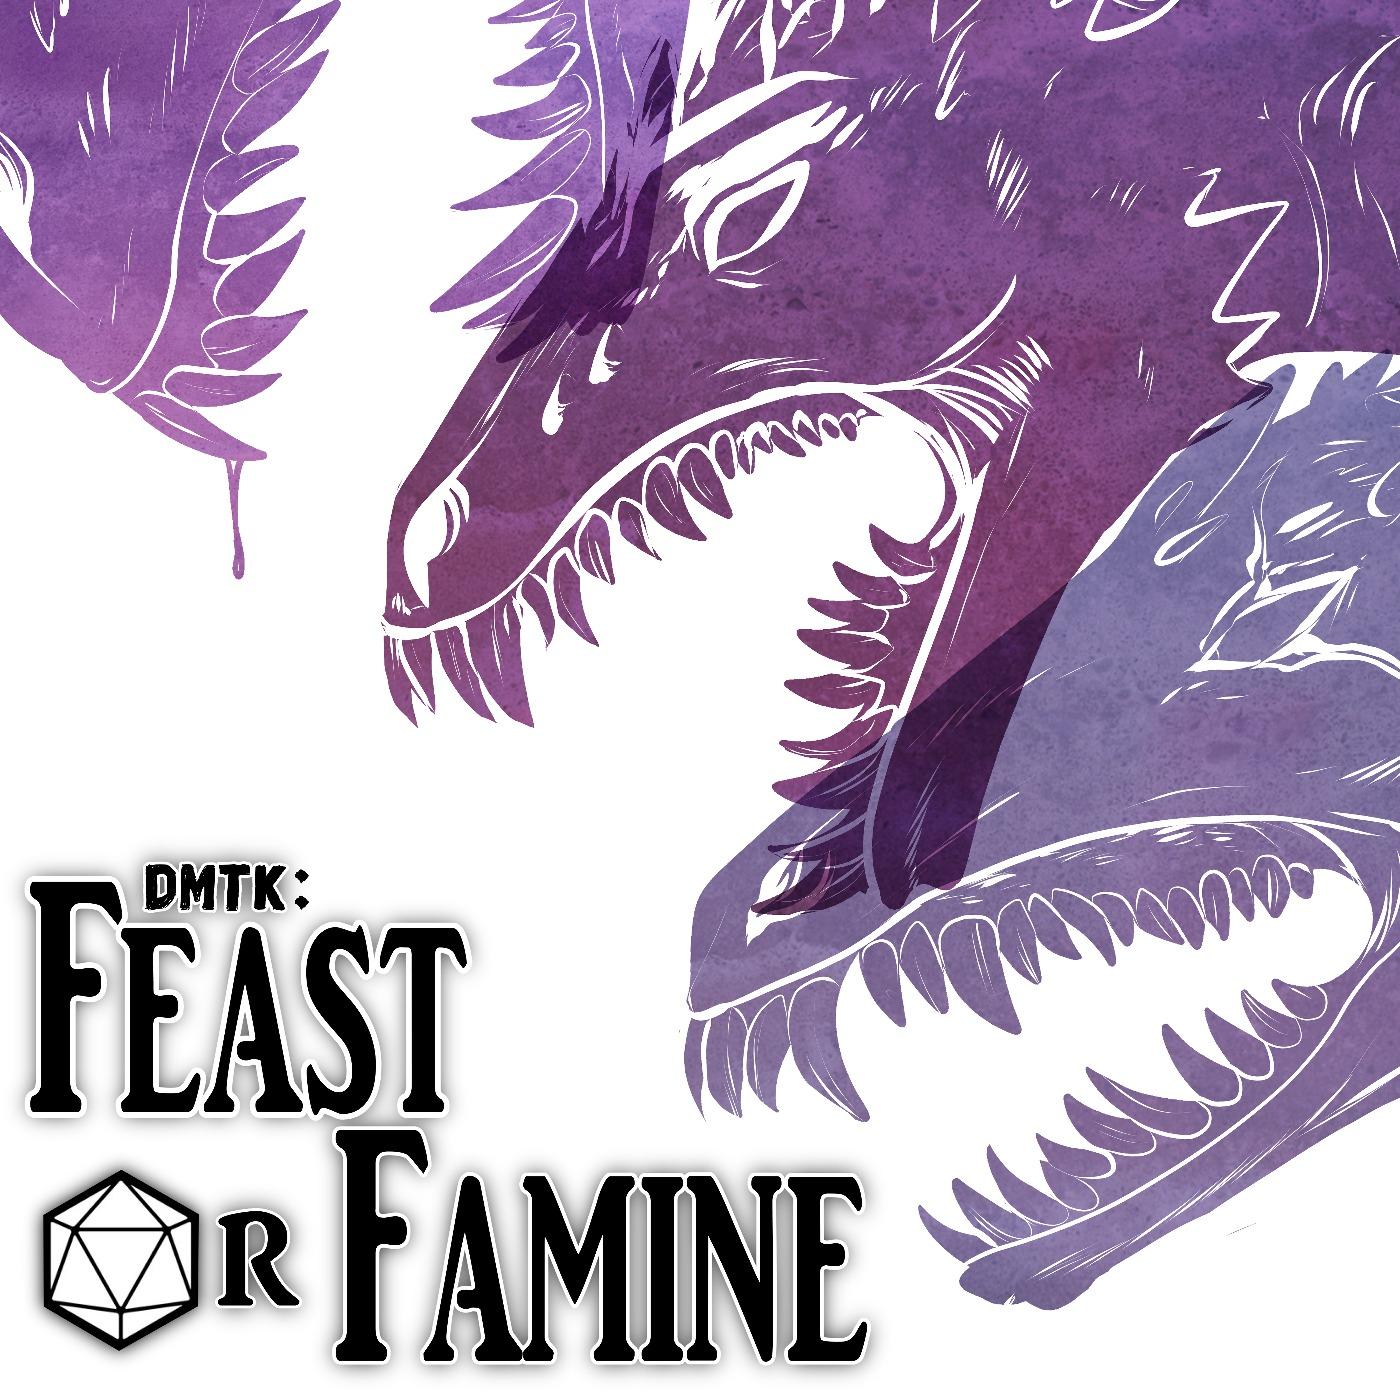 DMTK: Feast or Famine